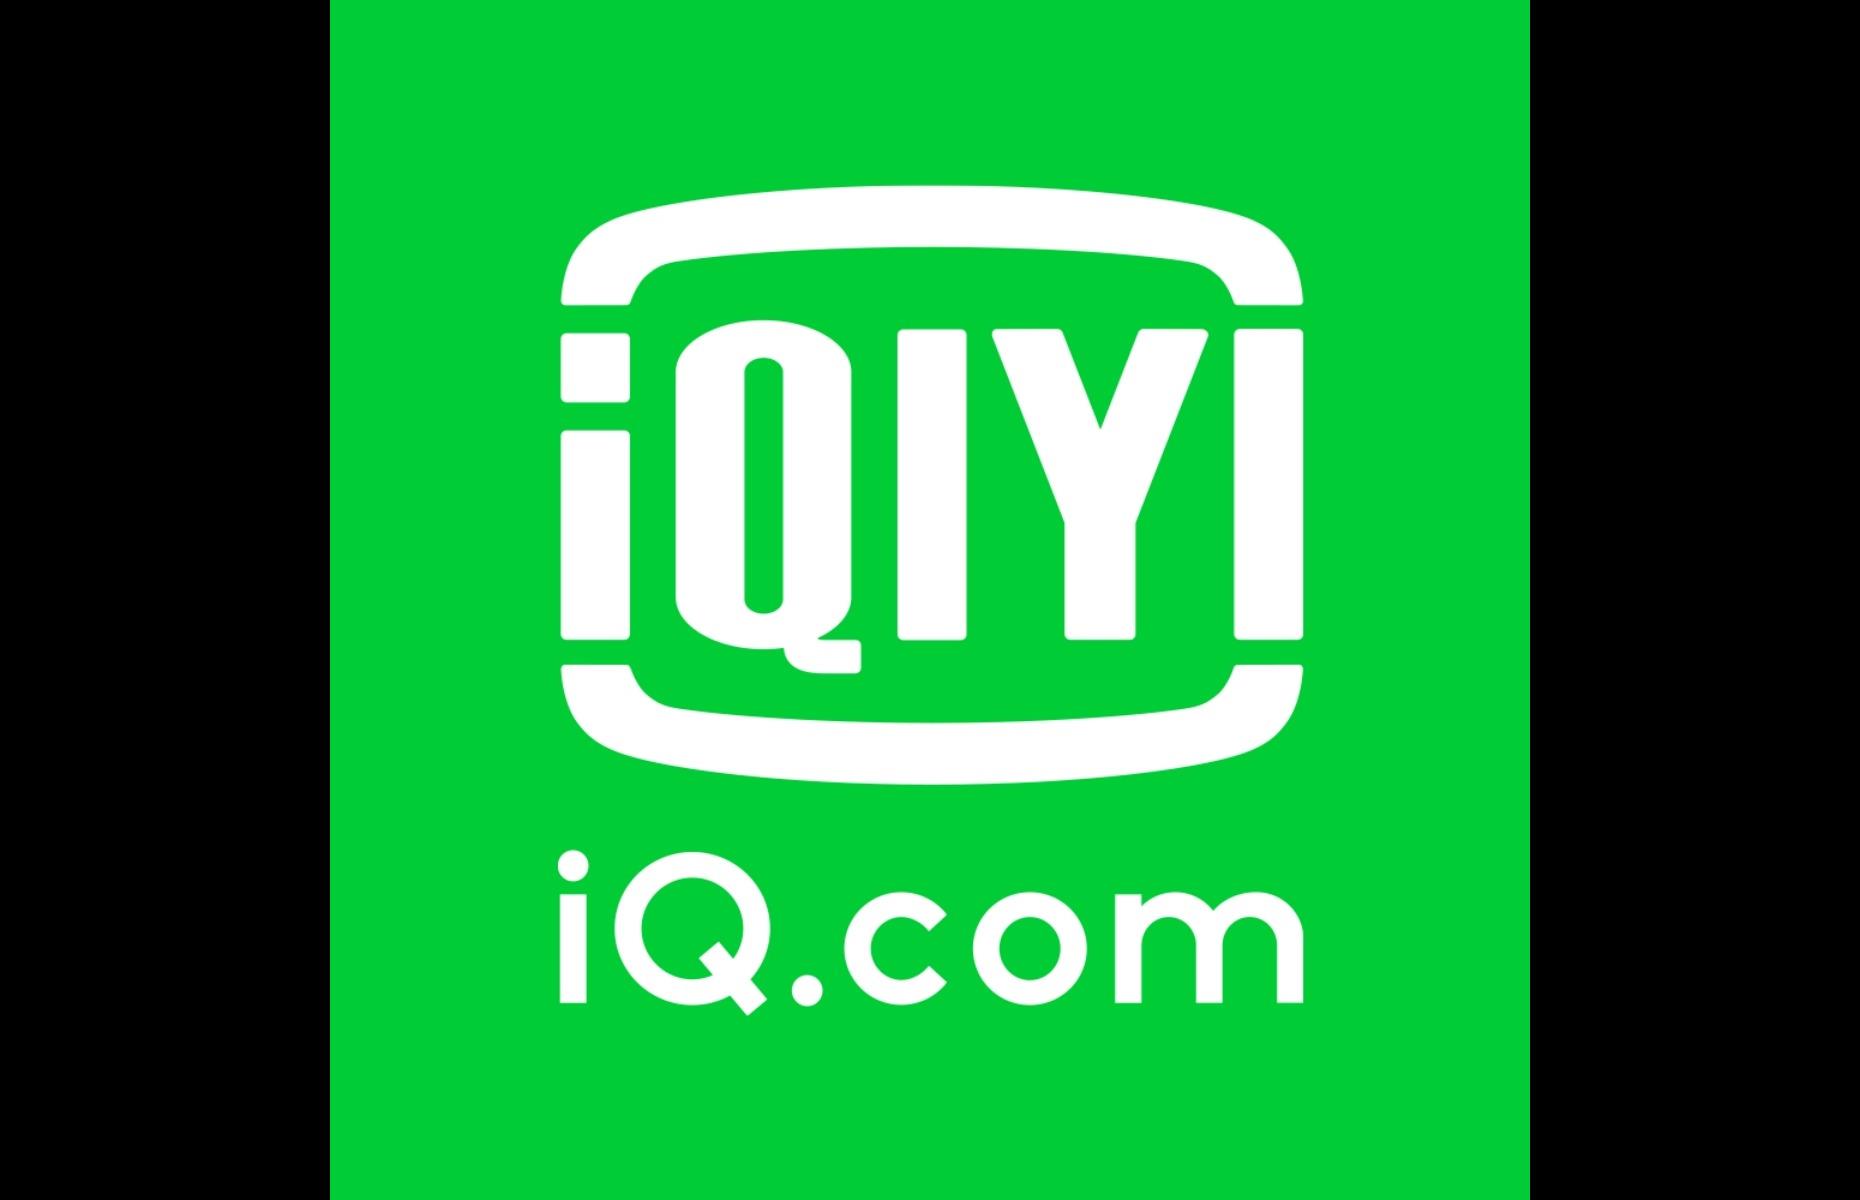 iQIYI – 101.4 million subscribers